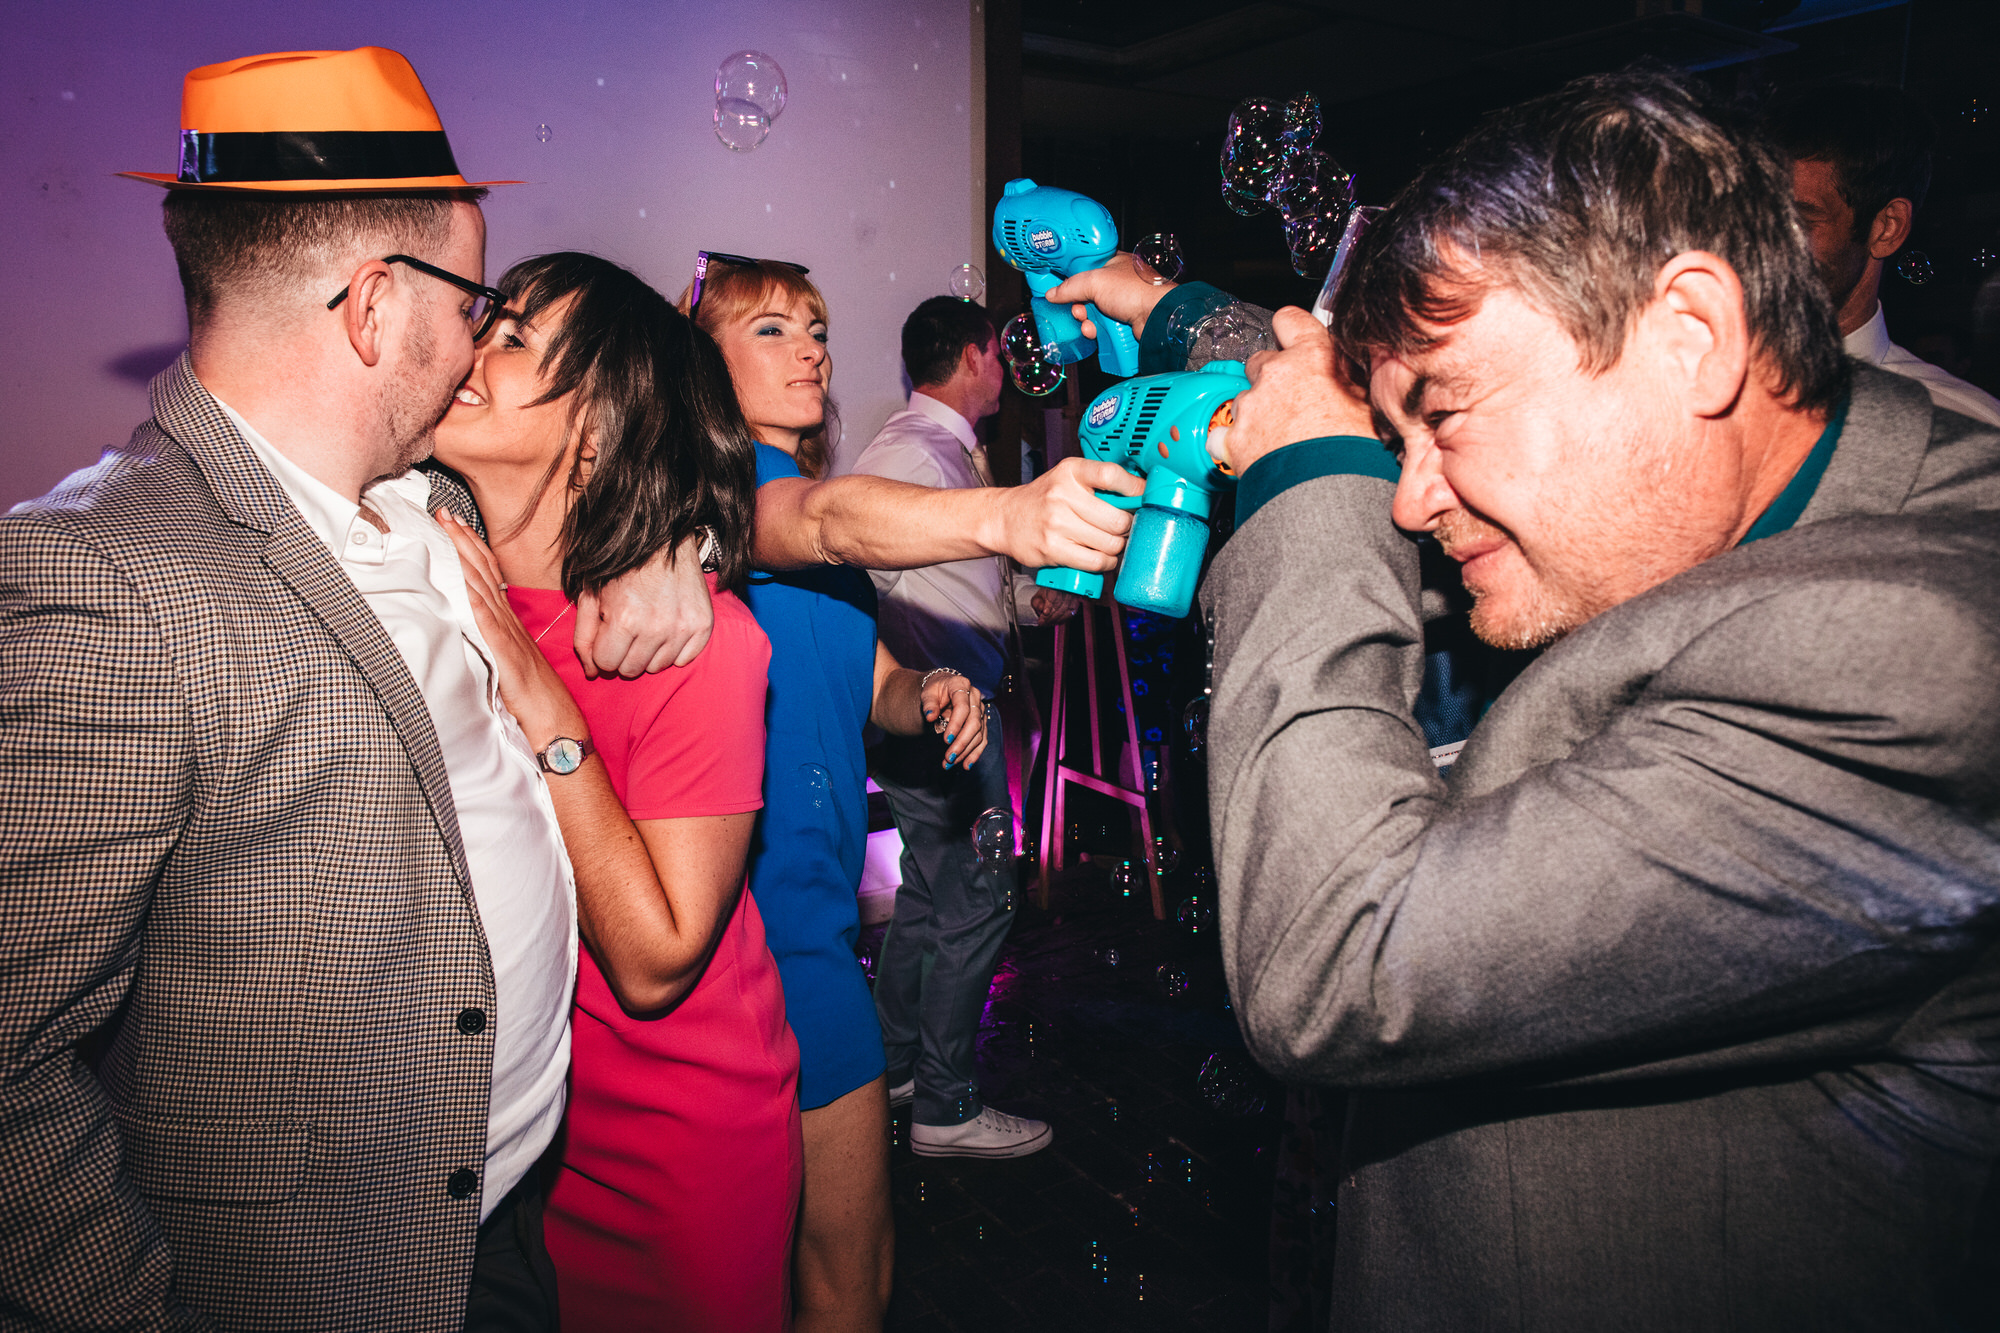 guests kissing on dancefloor, bubble gun fight